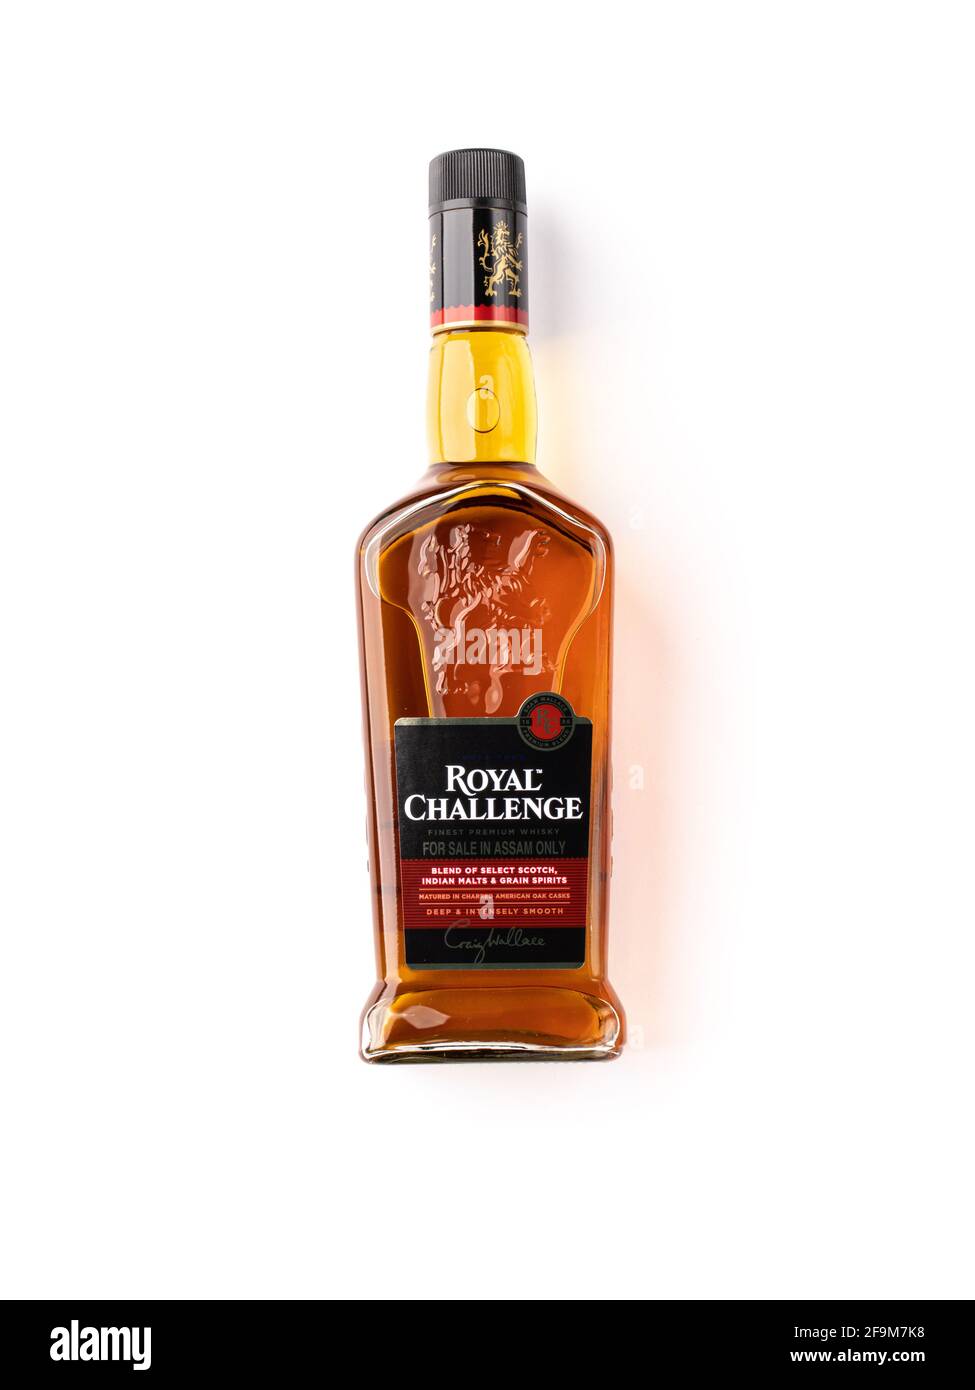 Assam, india - April 18, 2021 : Royal challenge whisky bottle stock image. Stock Photo